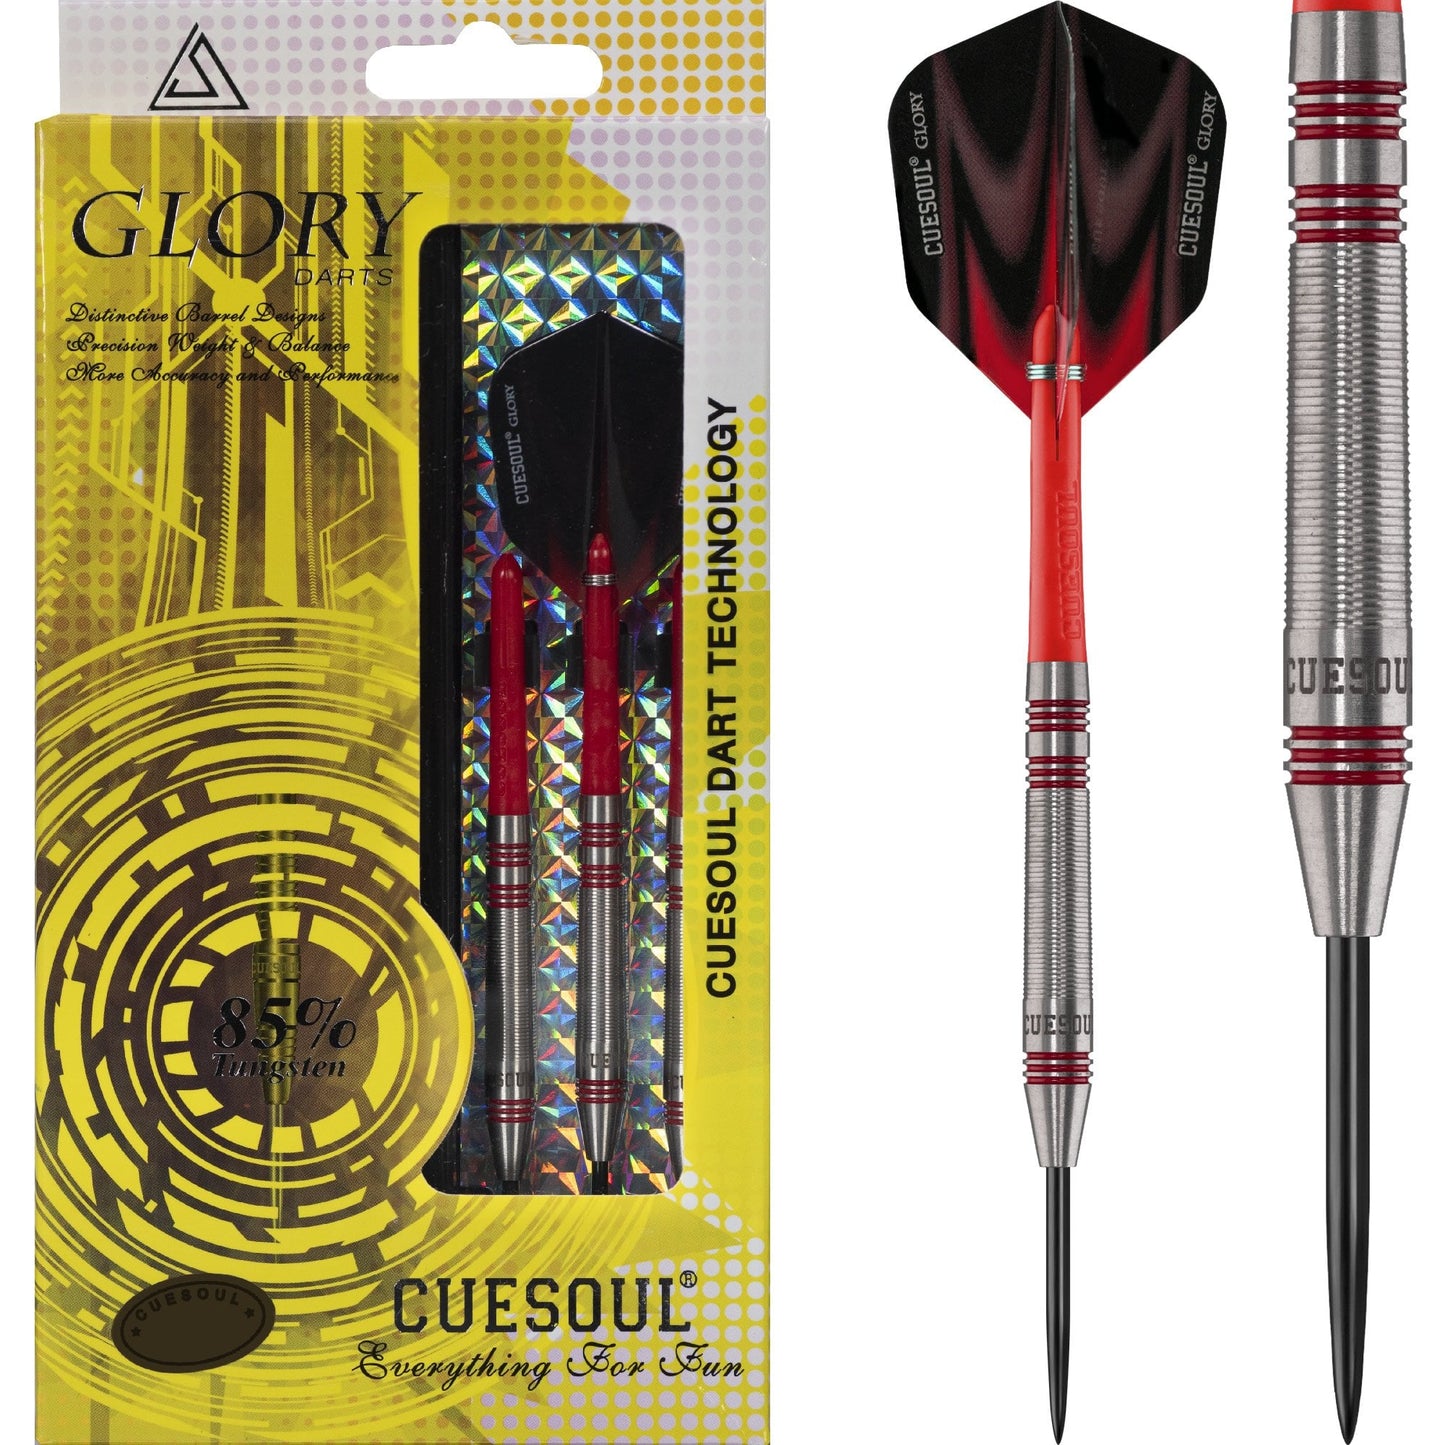 Cuesoul - Steel Tip Tungsten Darts - Glory - Red Grooves - Micro Grip 22g